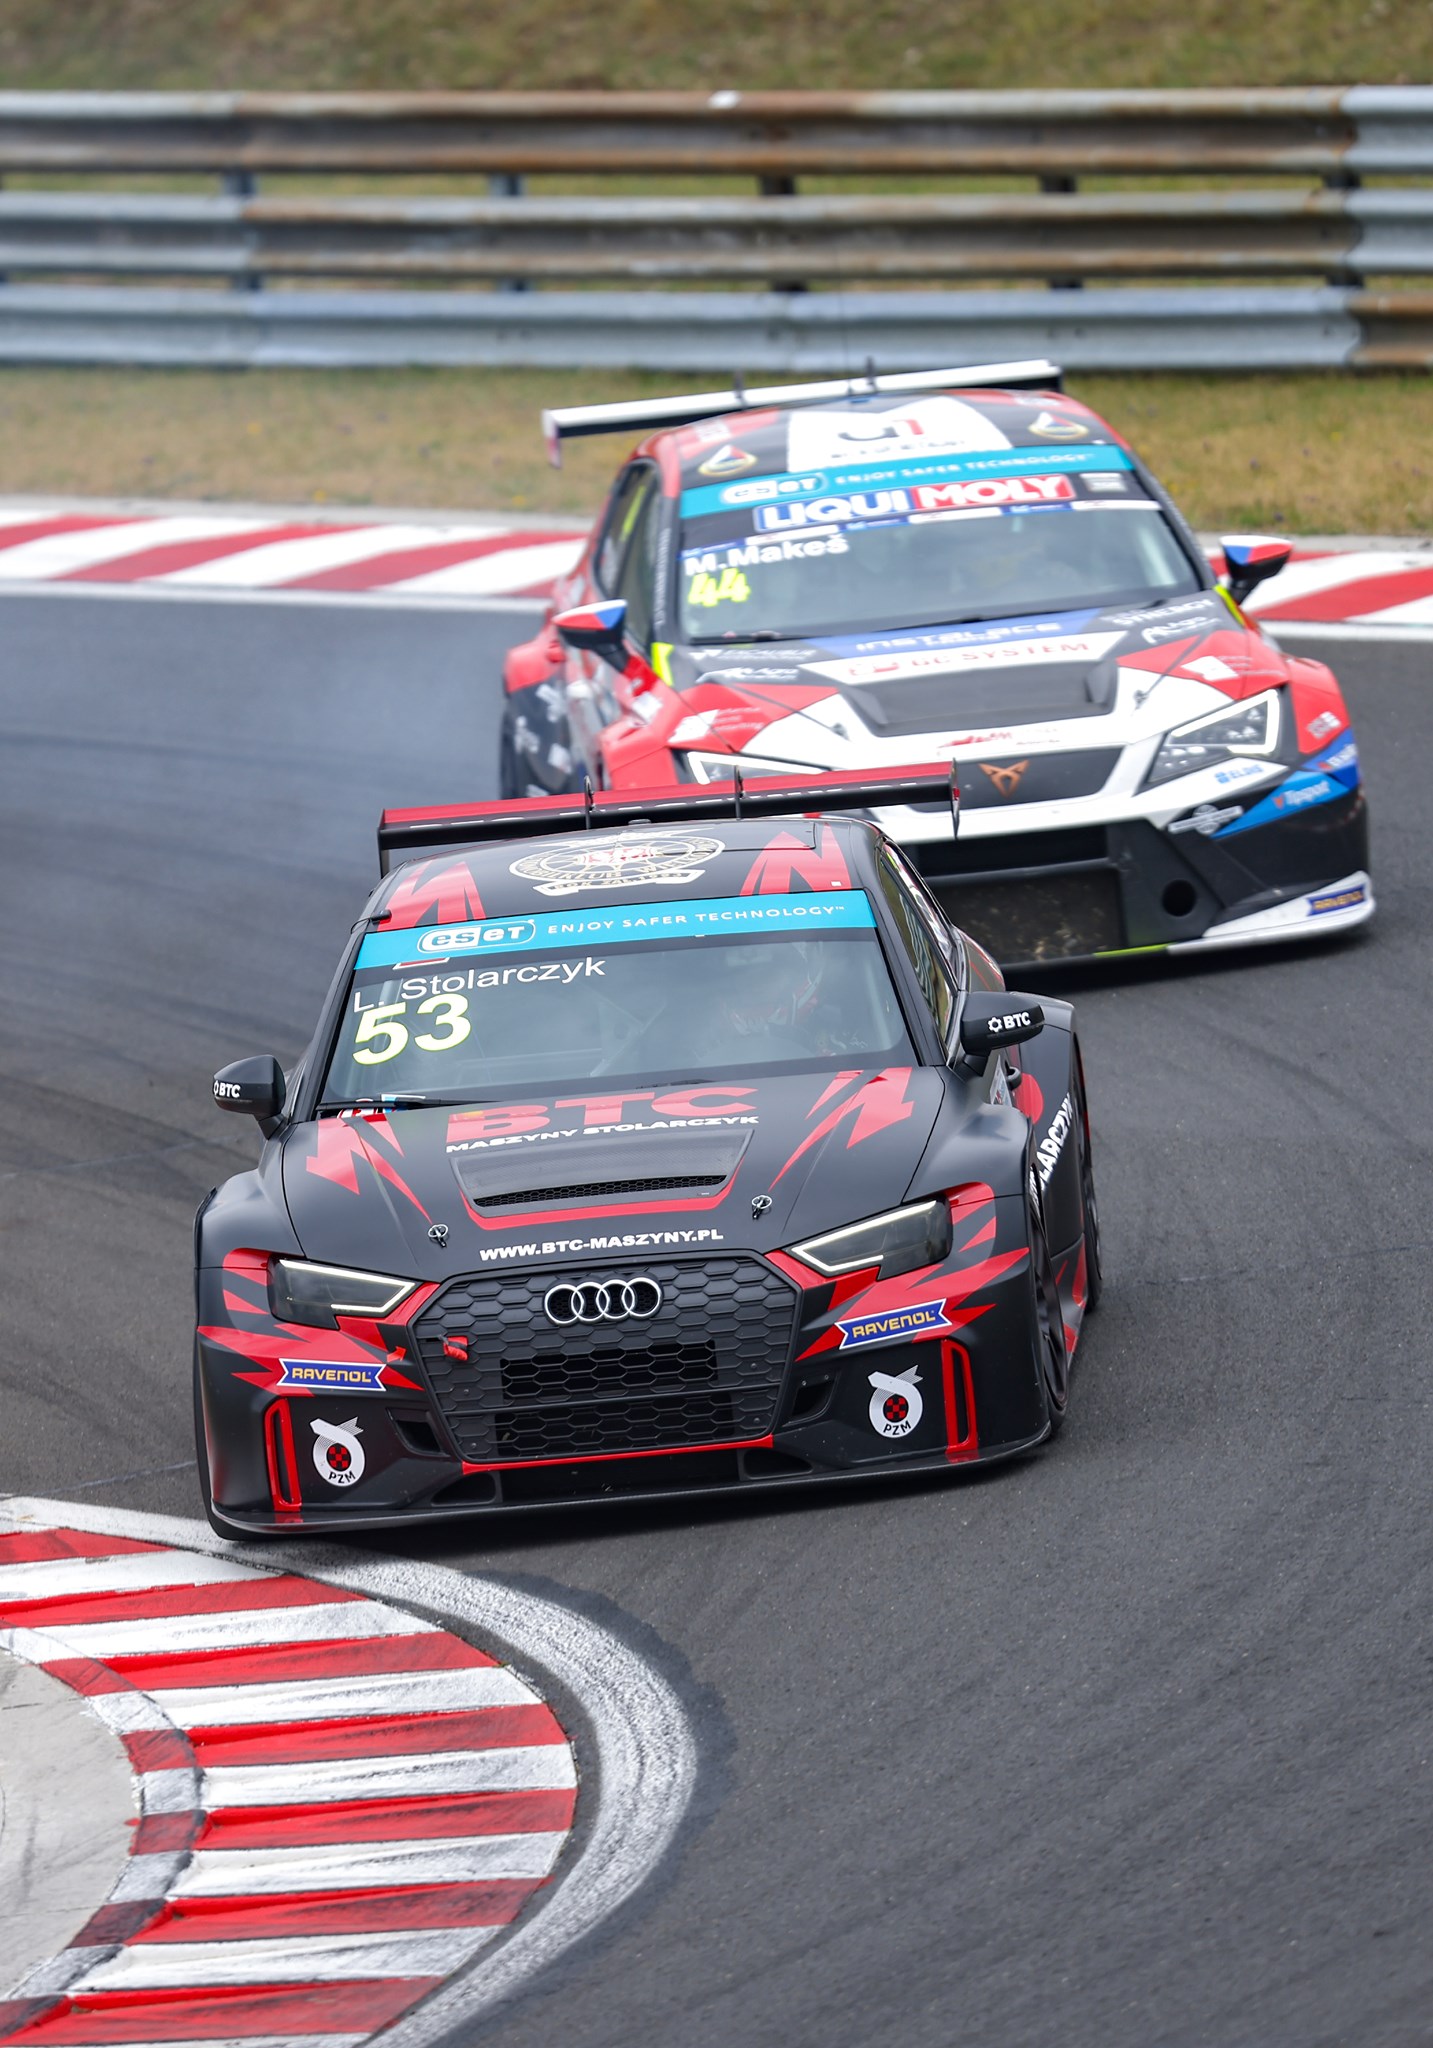 BTC Maszyny Racing aims to enter two cars next year